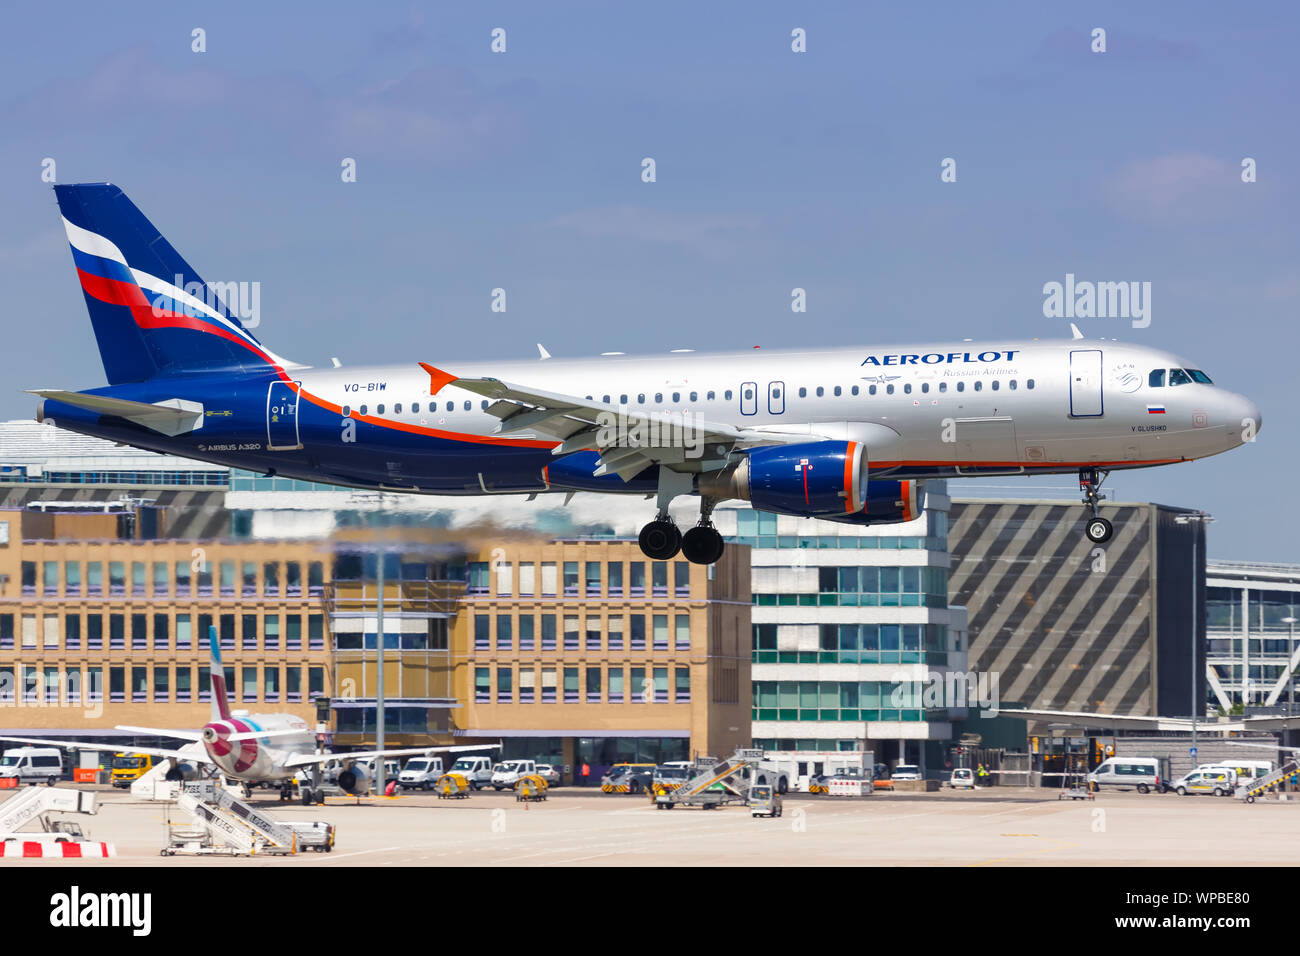 Stuttgart, Deutschland - 23. Mai 2019: Aeroflot Airbus A320 Flugzeug am Flughafen Stuttgart (STR) in Deutschland. Stockfoto